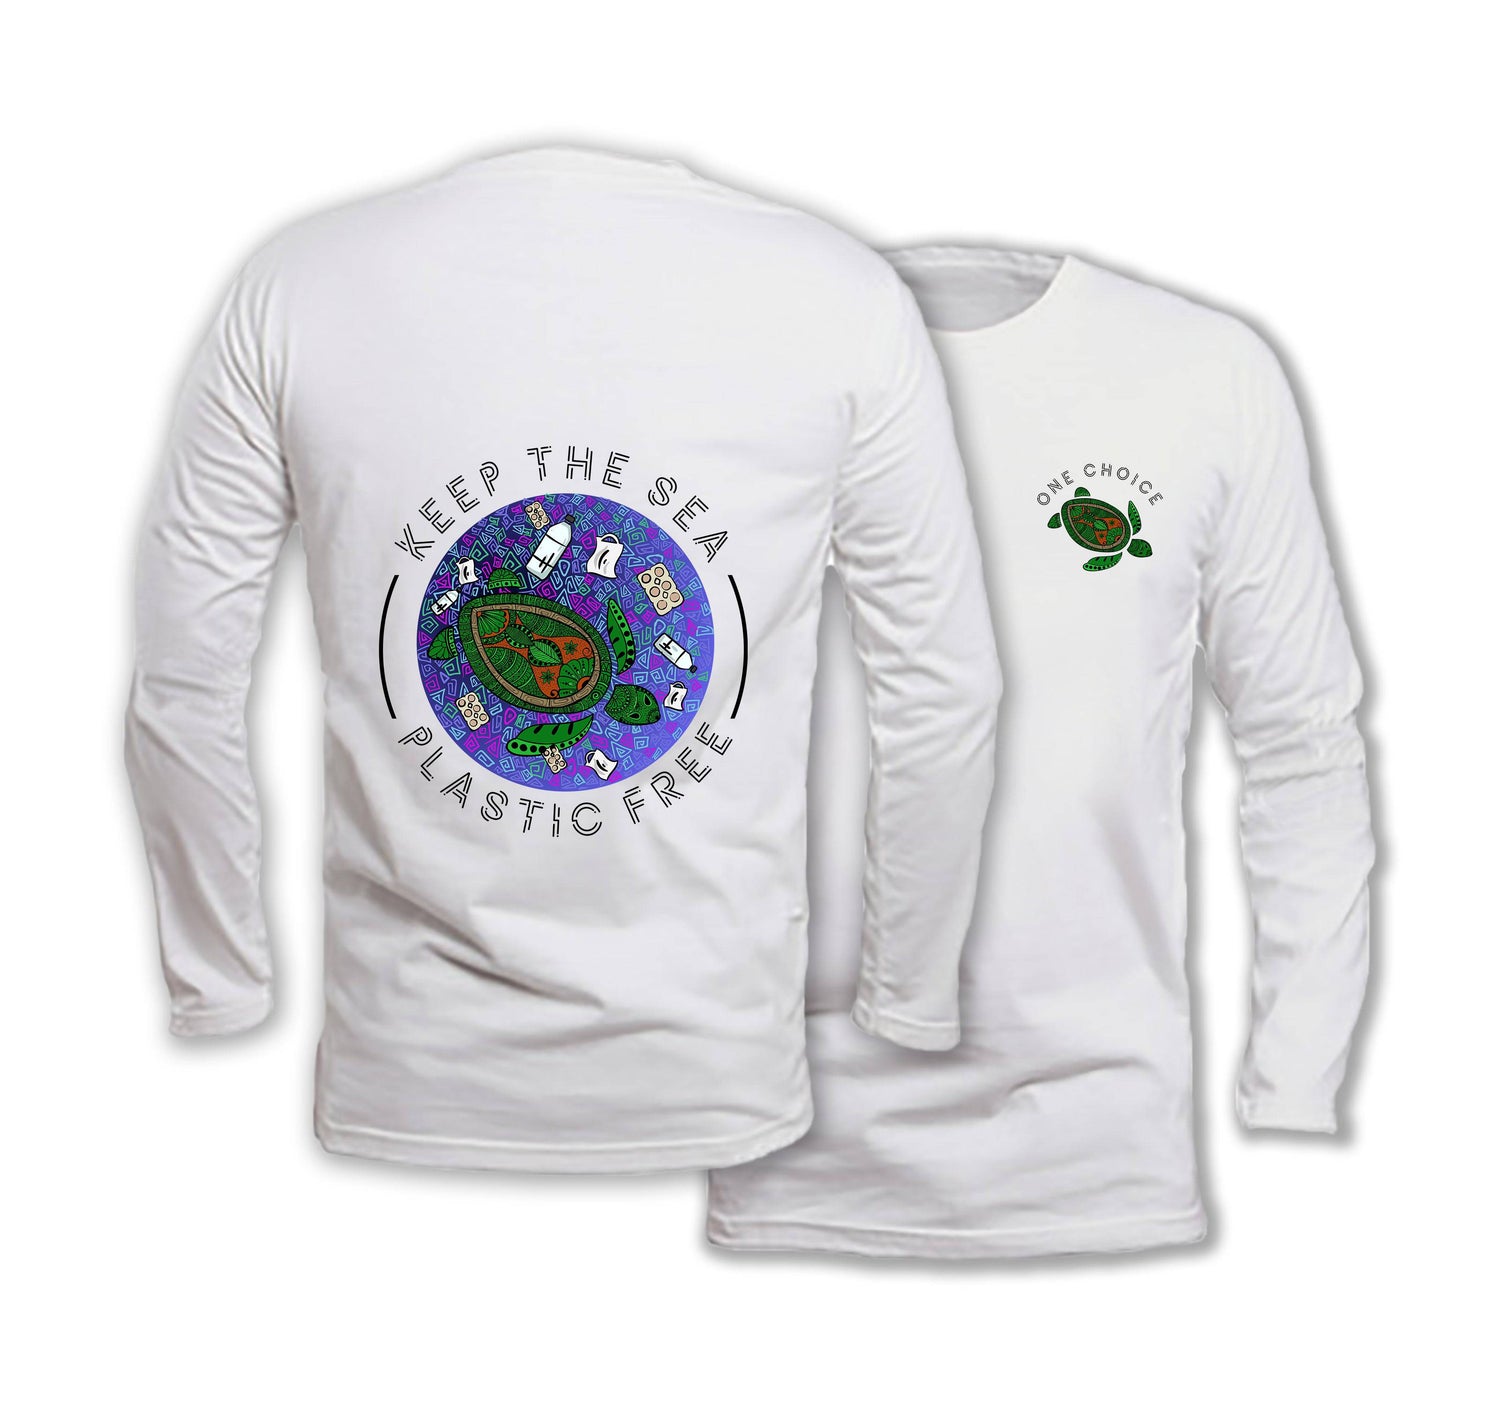 Keep the sea plastic free - Long Sleeve Organic Cotton T-Shirt - One Choice Apparel